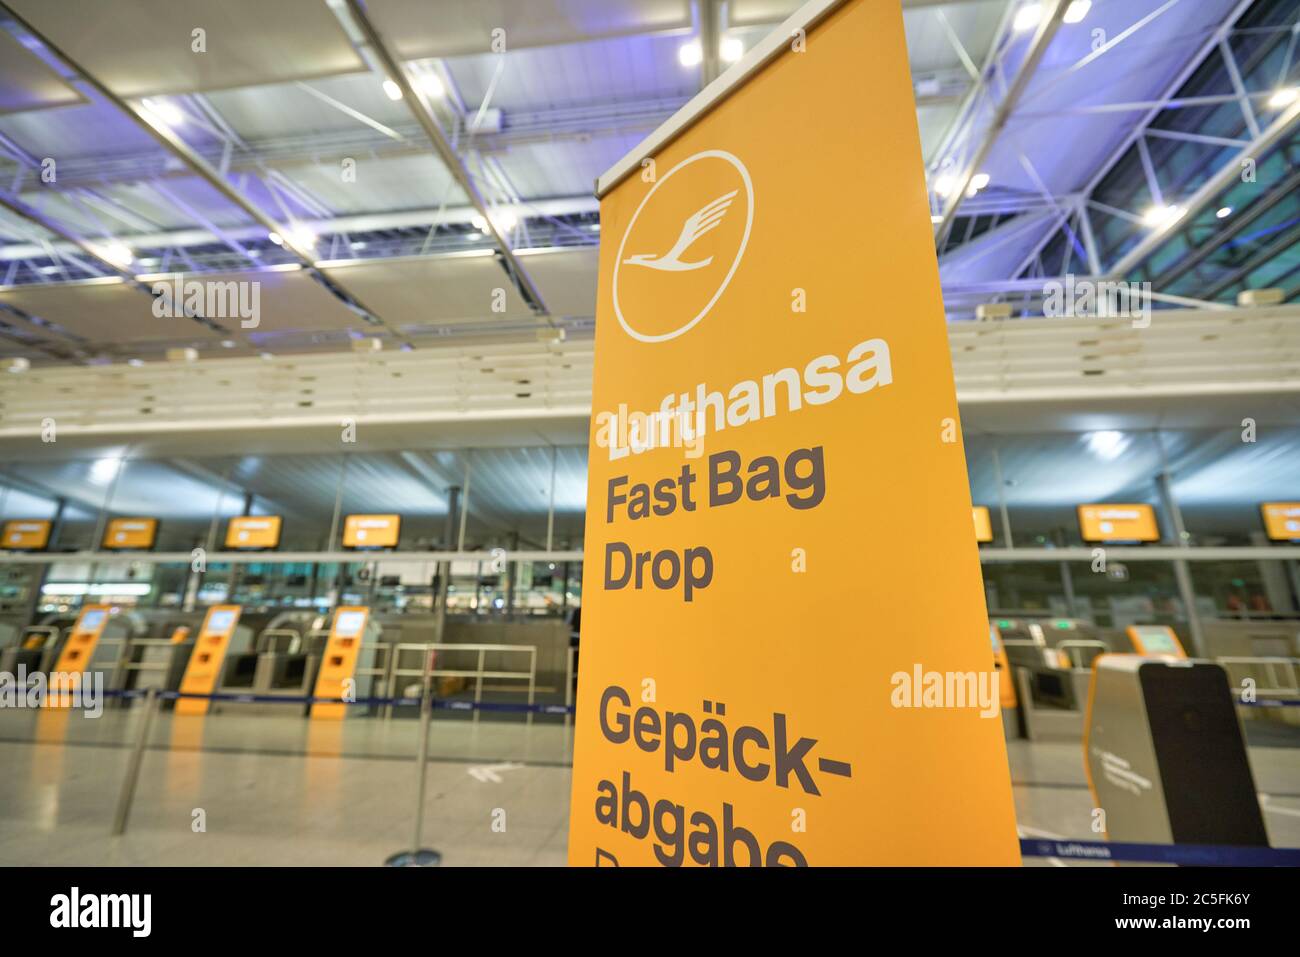 Lufthansa launches self-service bag drop at Munich Airport